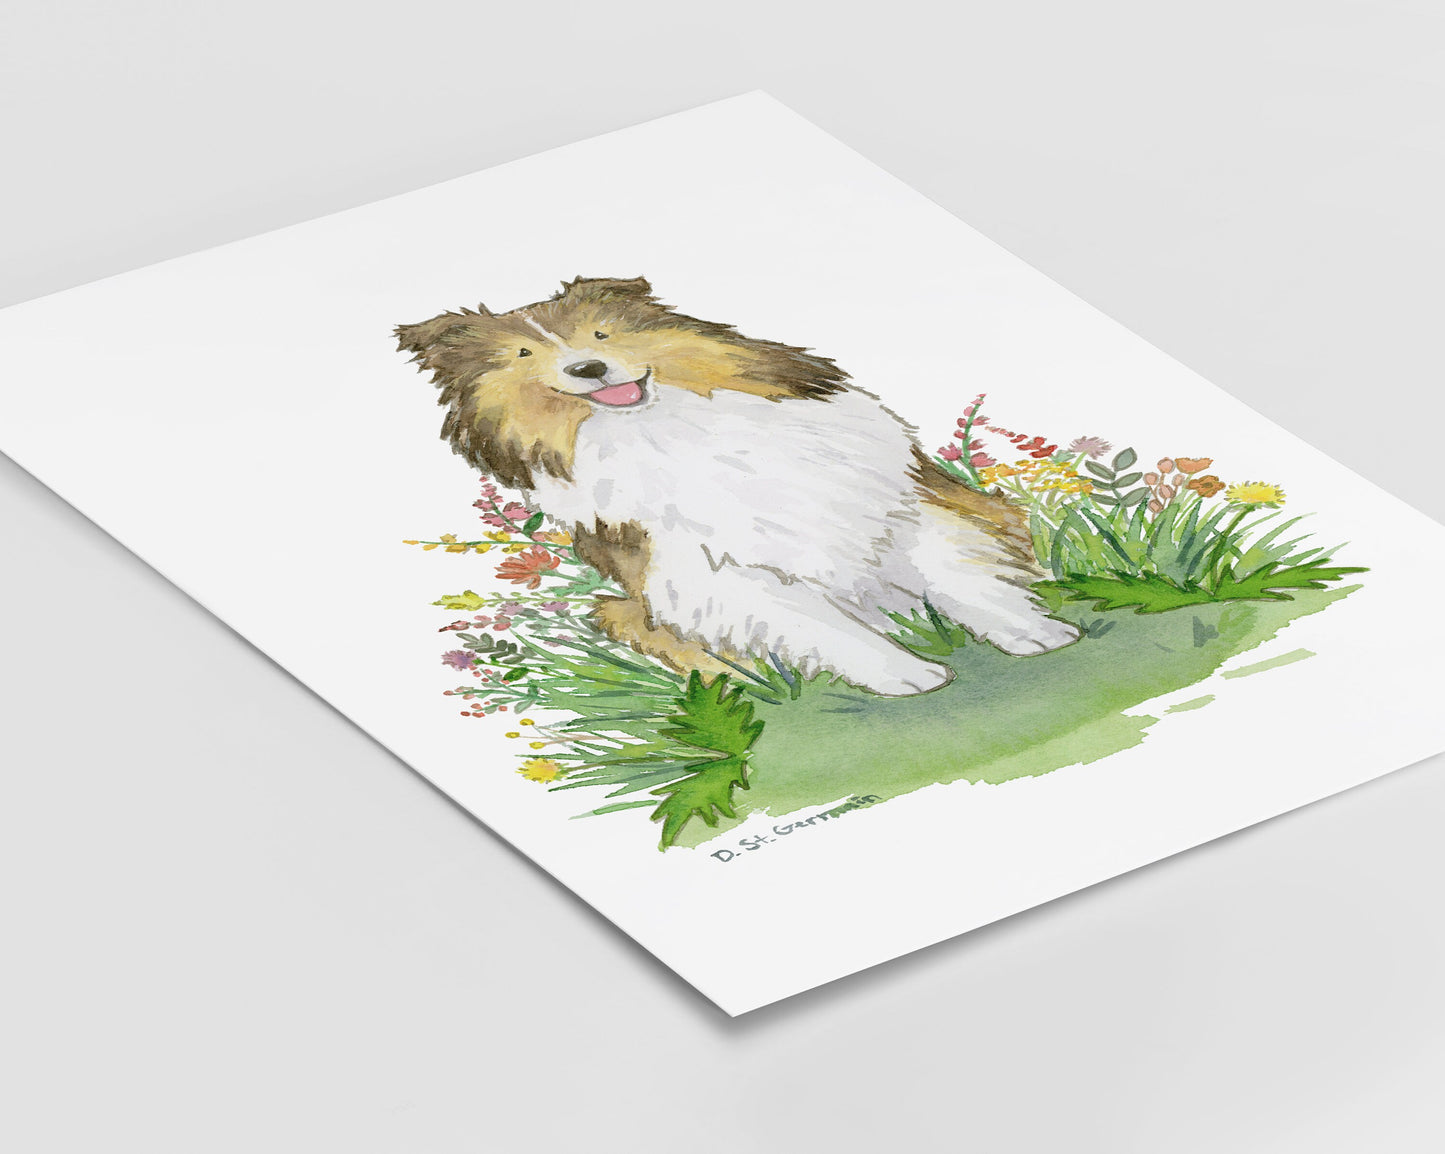 Sheltie Art, Sable Sheltie with Flowers Print, Sable Sheltie, Shetland Sheepdog, Children's Art, Sheltie Gift, Sheltie Lover, Watercolor Dog